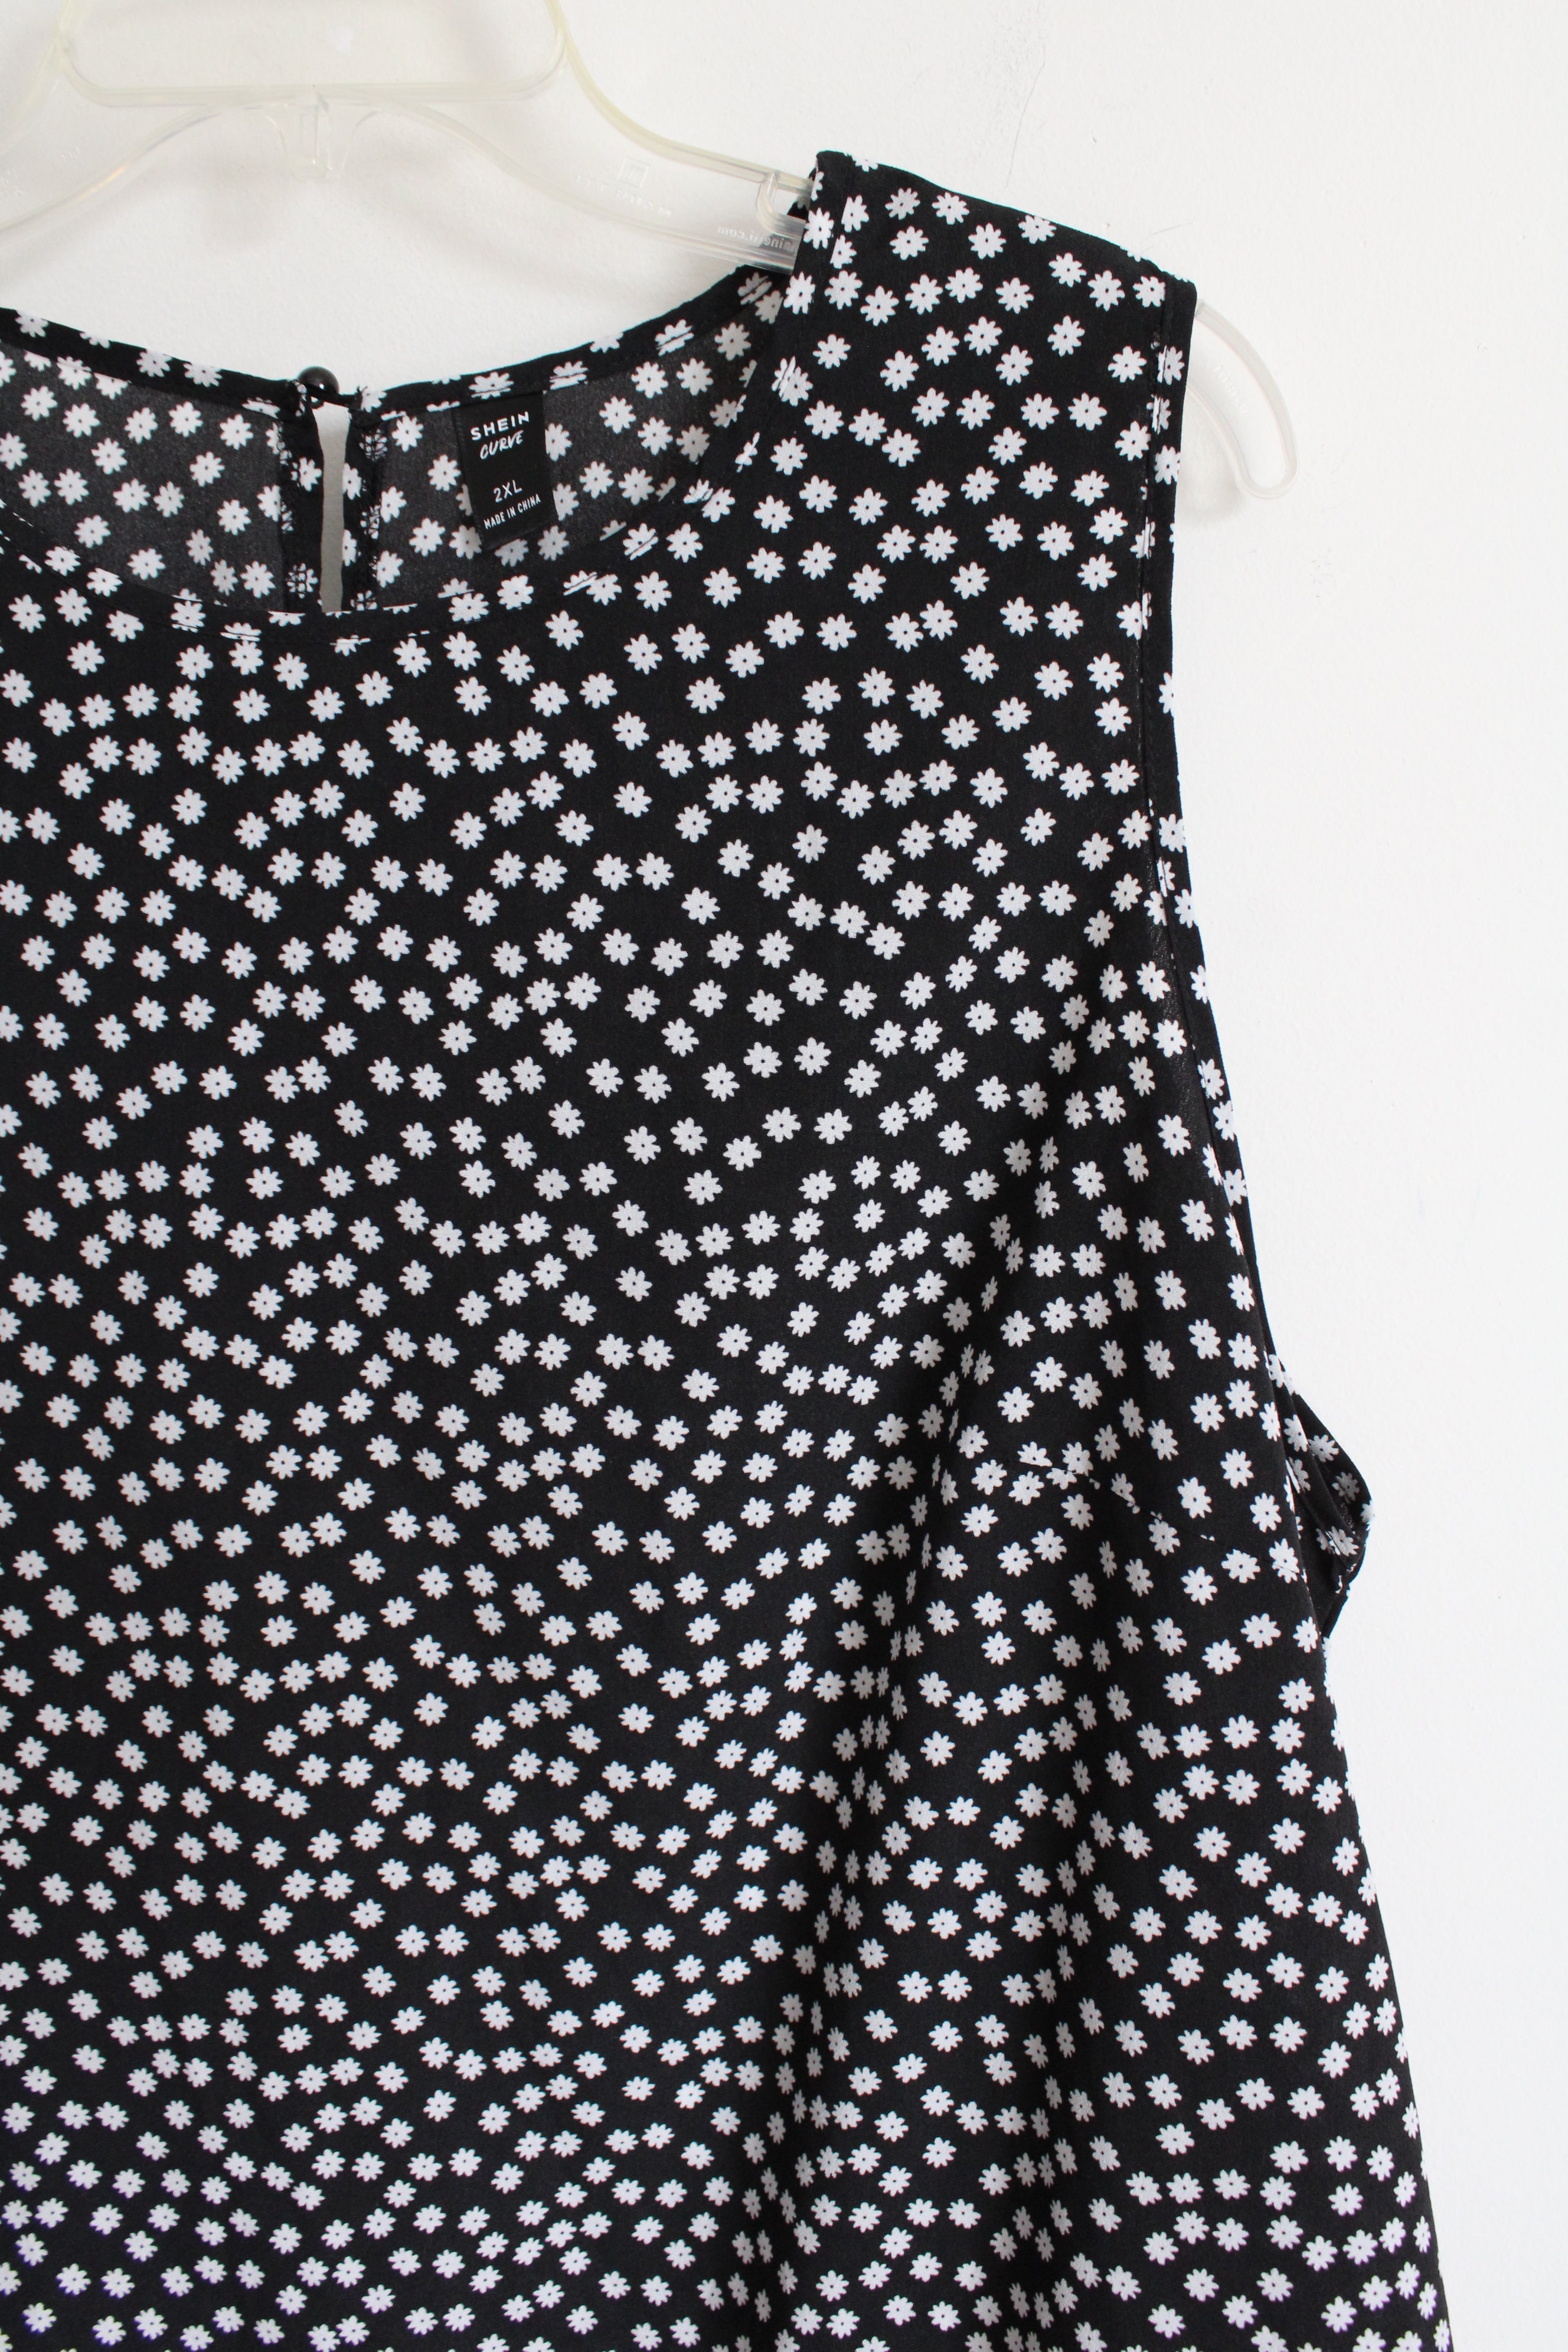 Shein Curve Black White Daisy Dress | 2XL